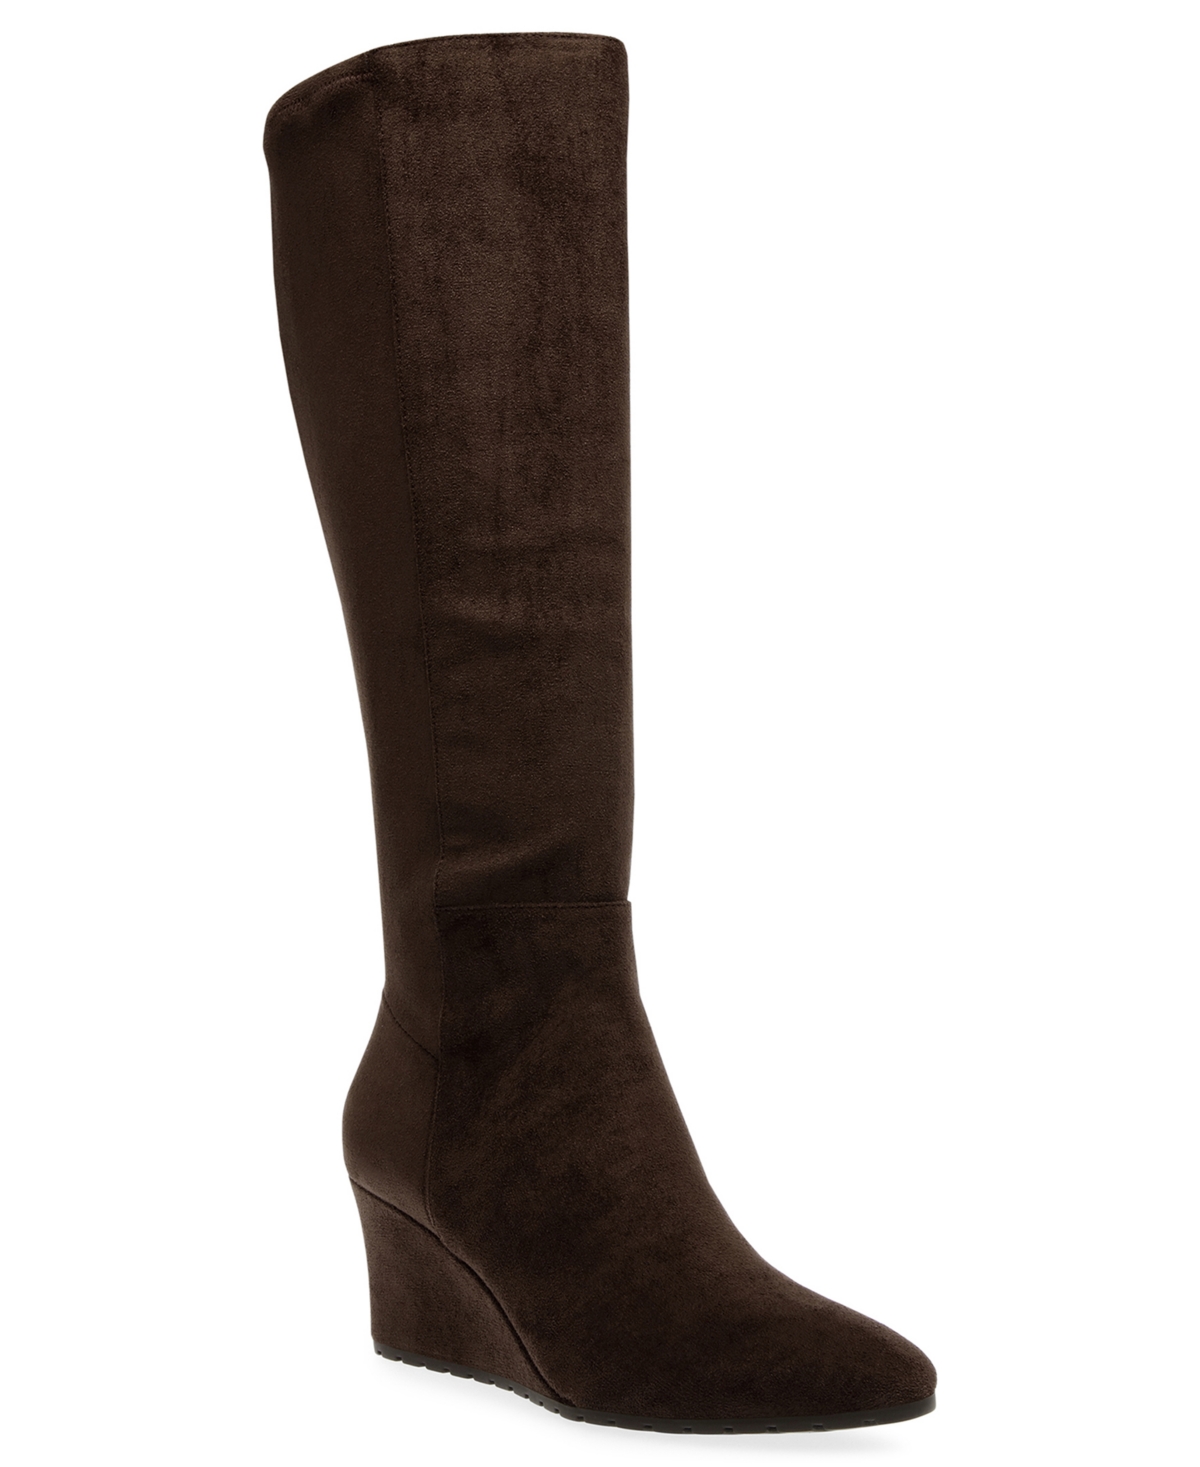 Women's Valonia Wedge Heel Knee High Boots - Dark Brown Ms